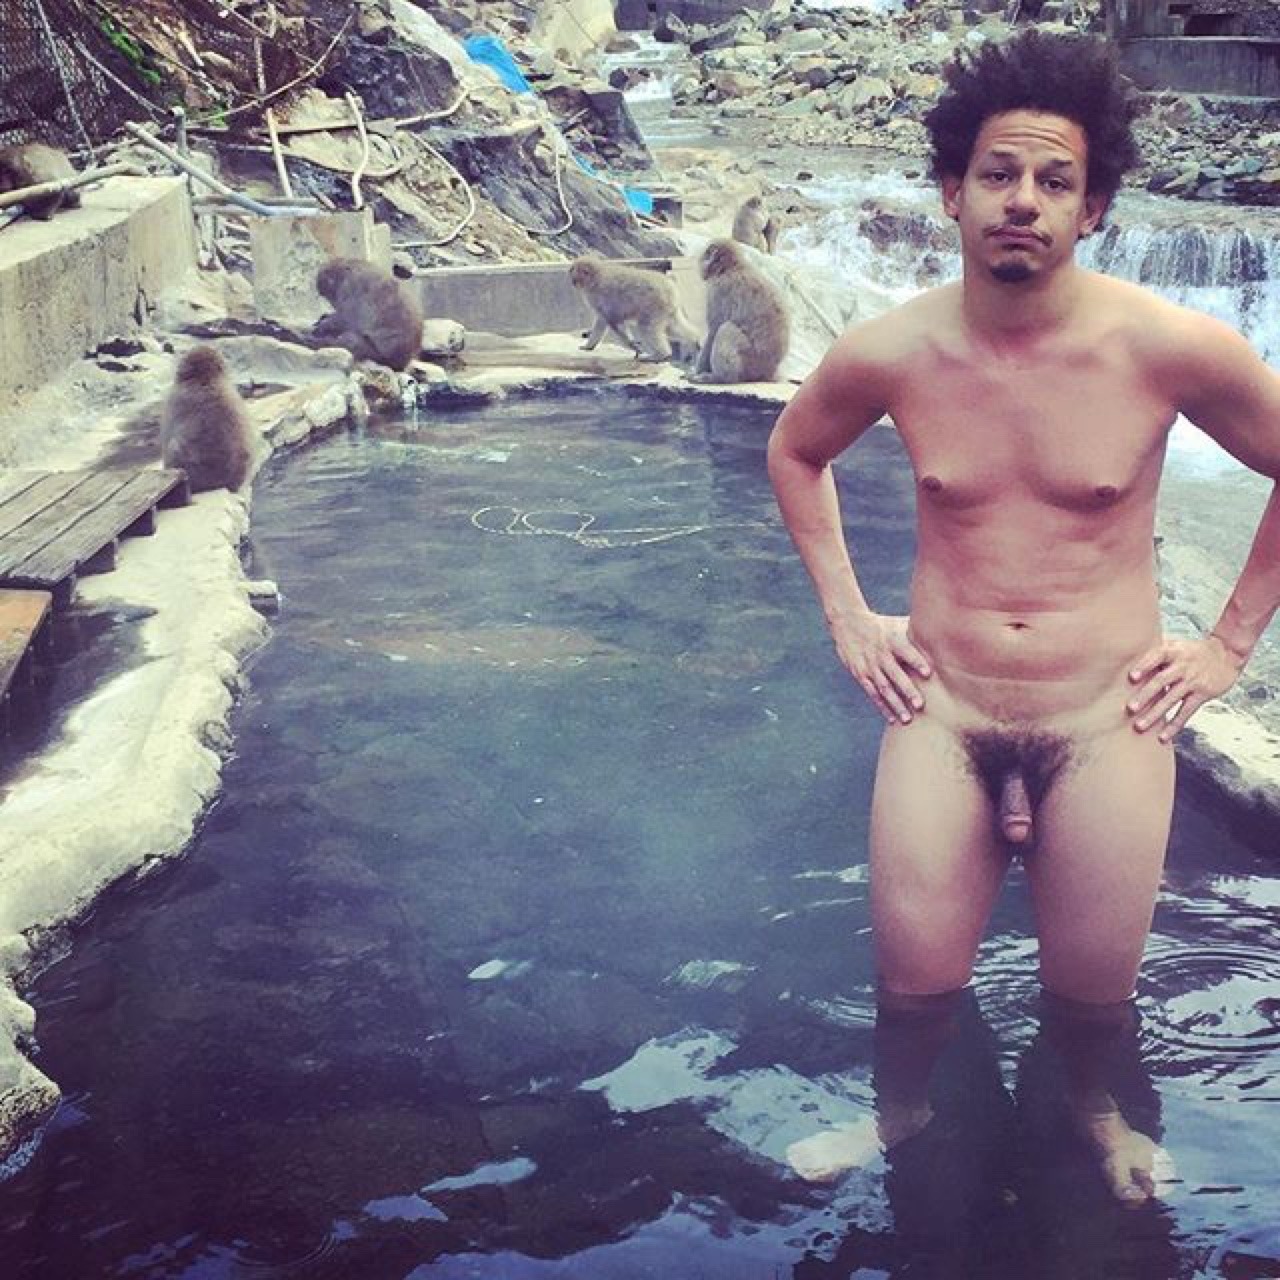 celebrityeggplant:
â€œEric Andre is always randomly uploading nudes on Instagram
â€